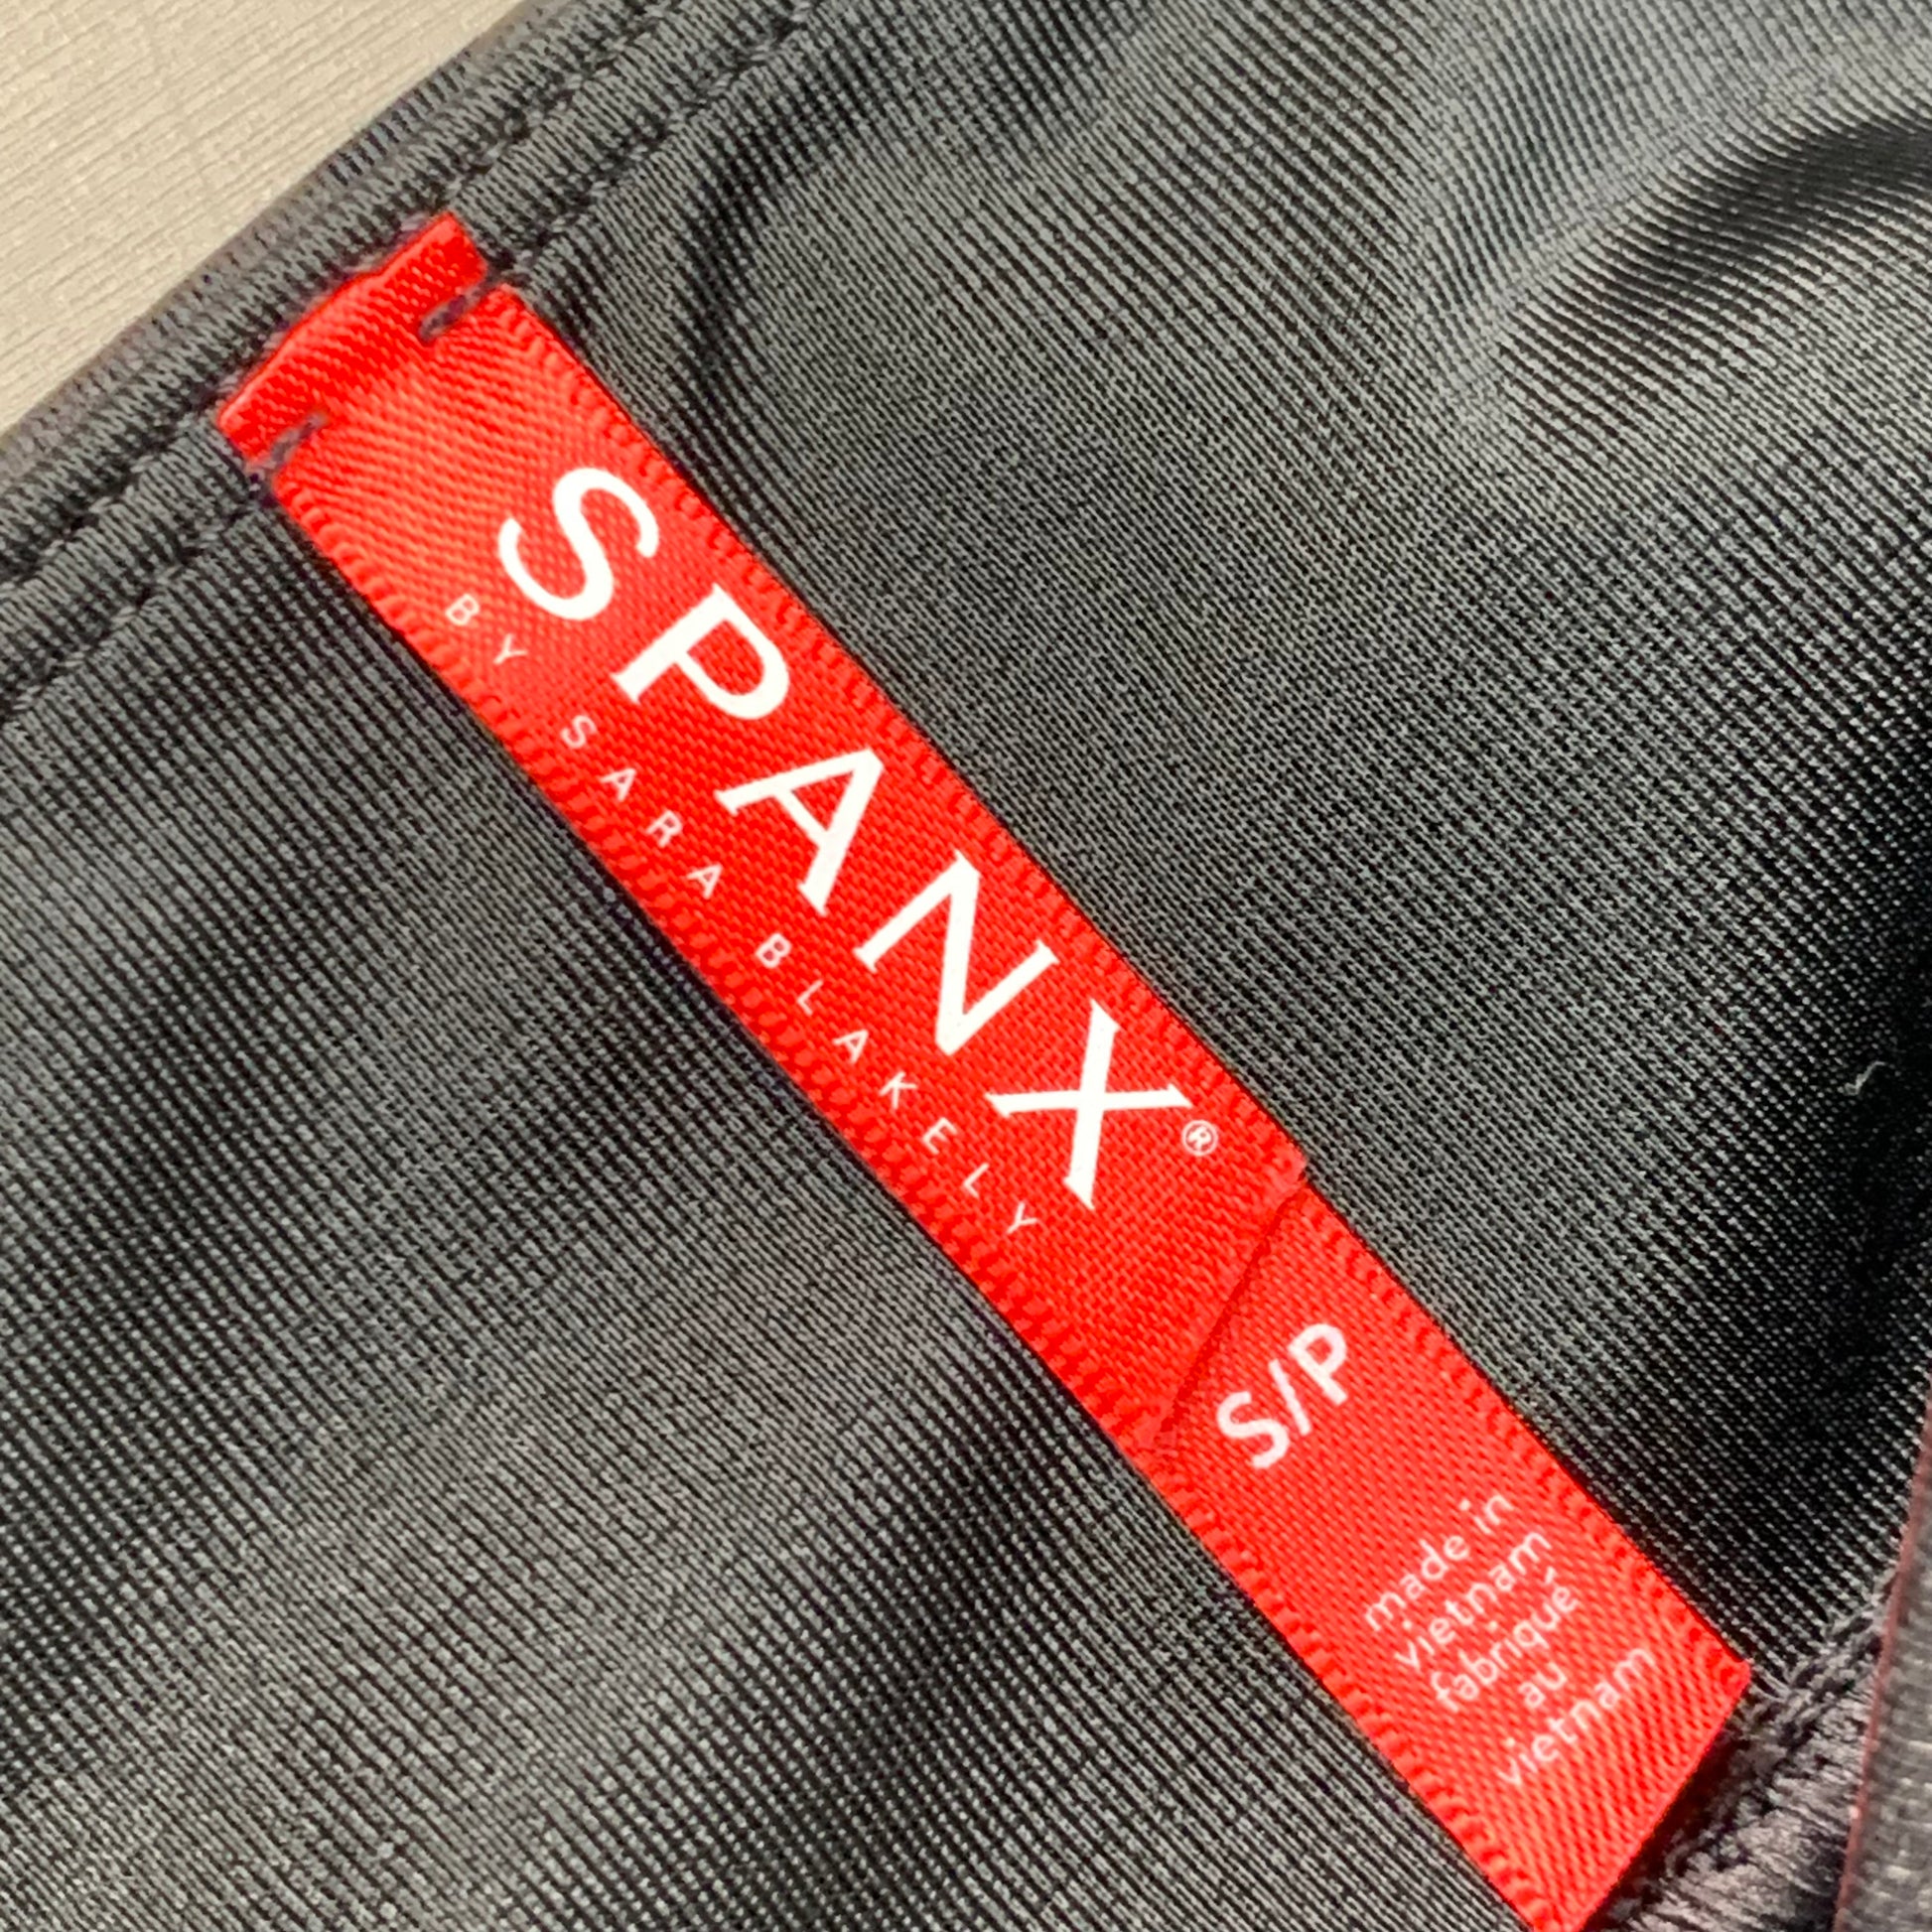 Spanx Woman's M Black Faux Leather Camo Leggings Mid Rise Sytle 20185R